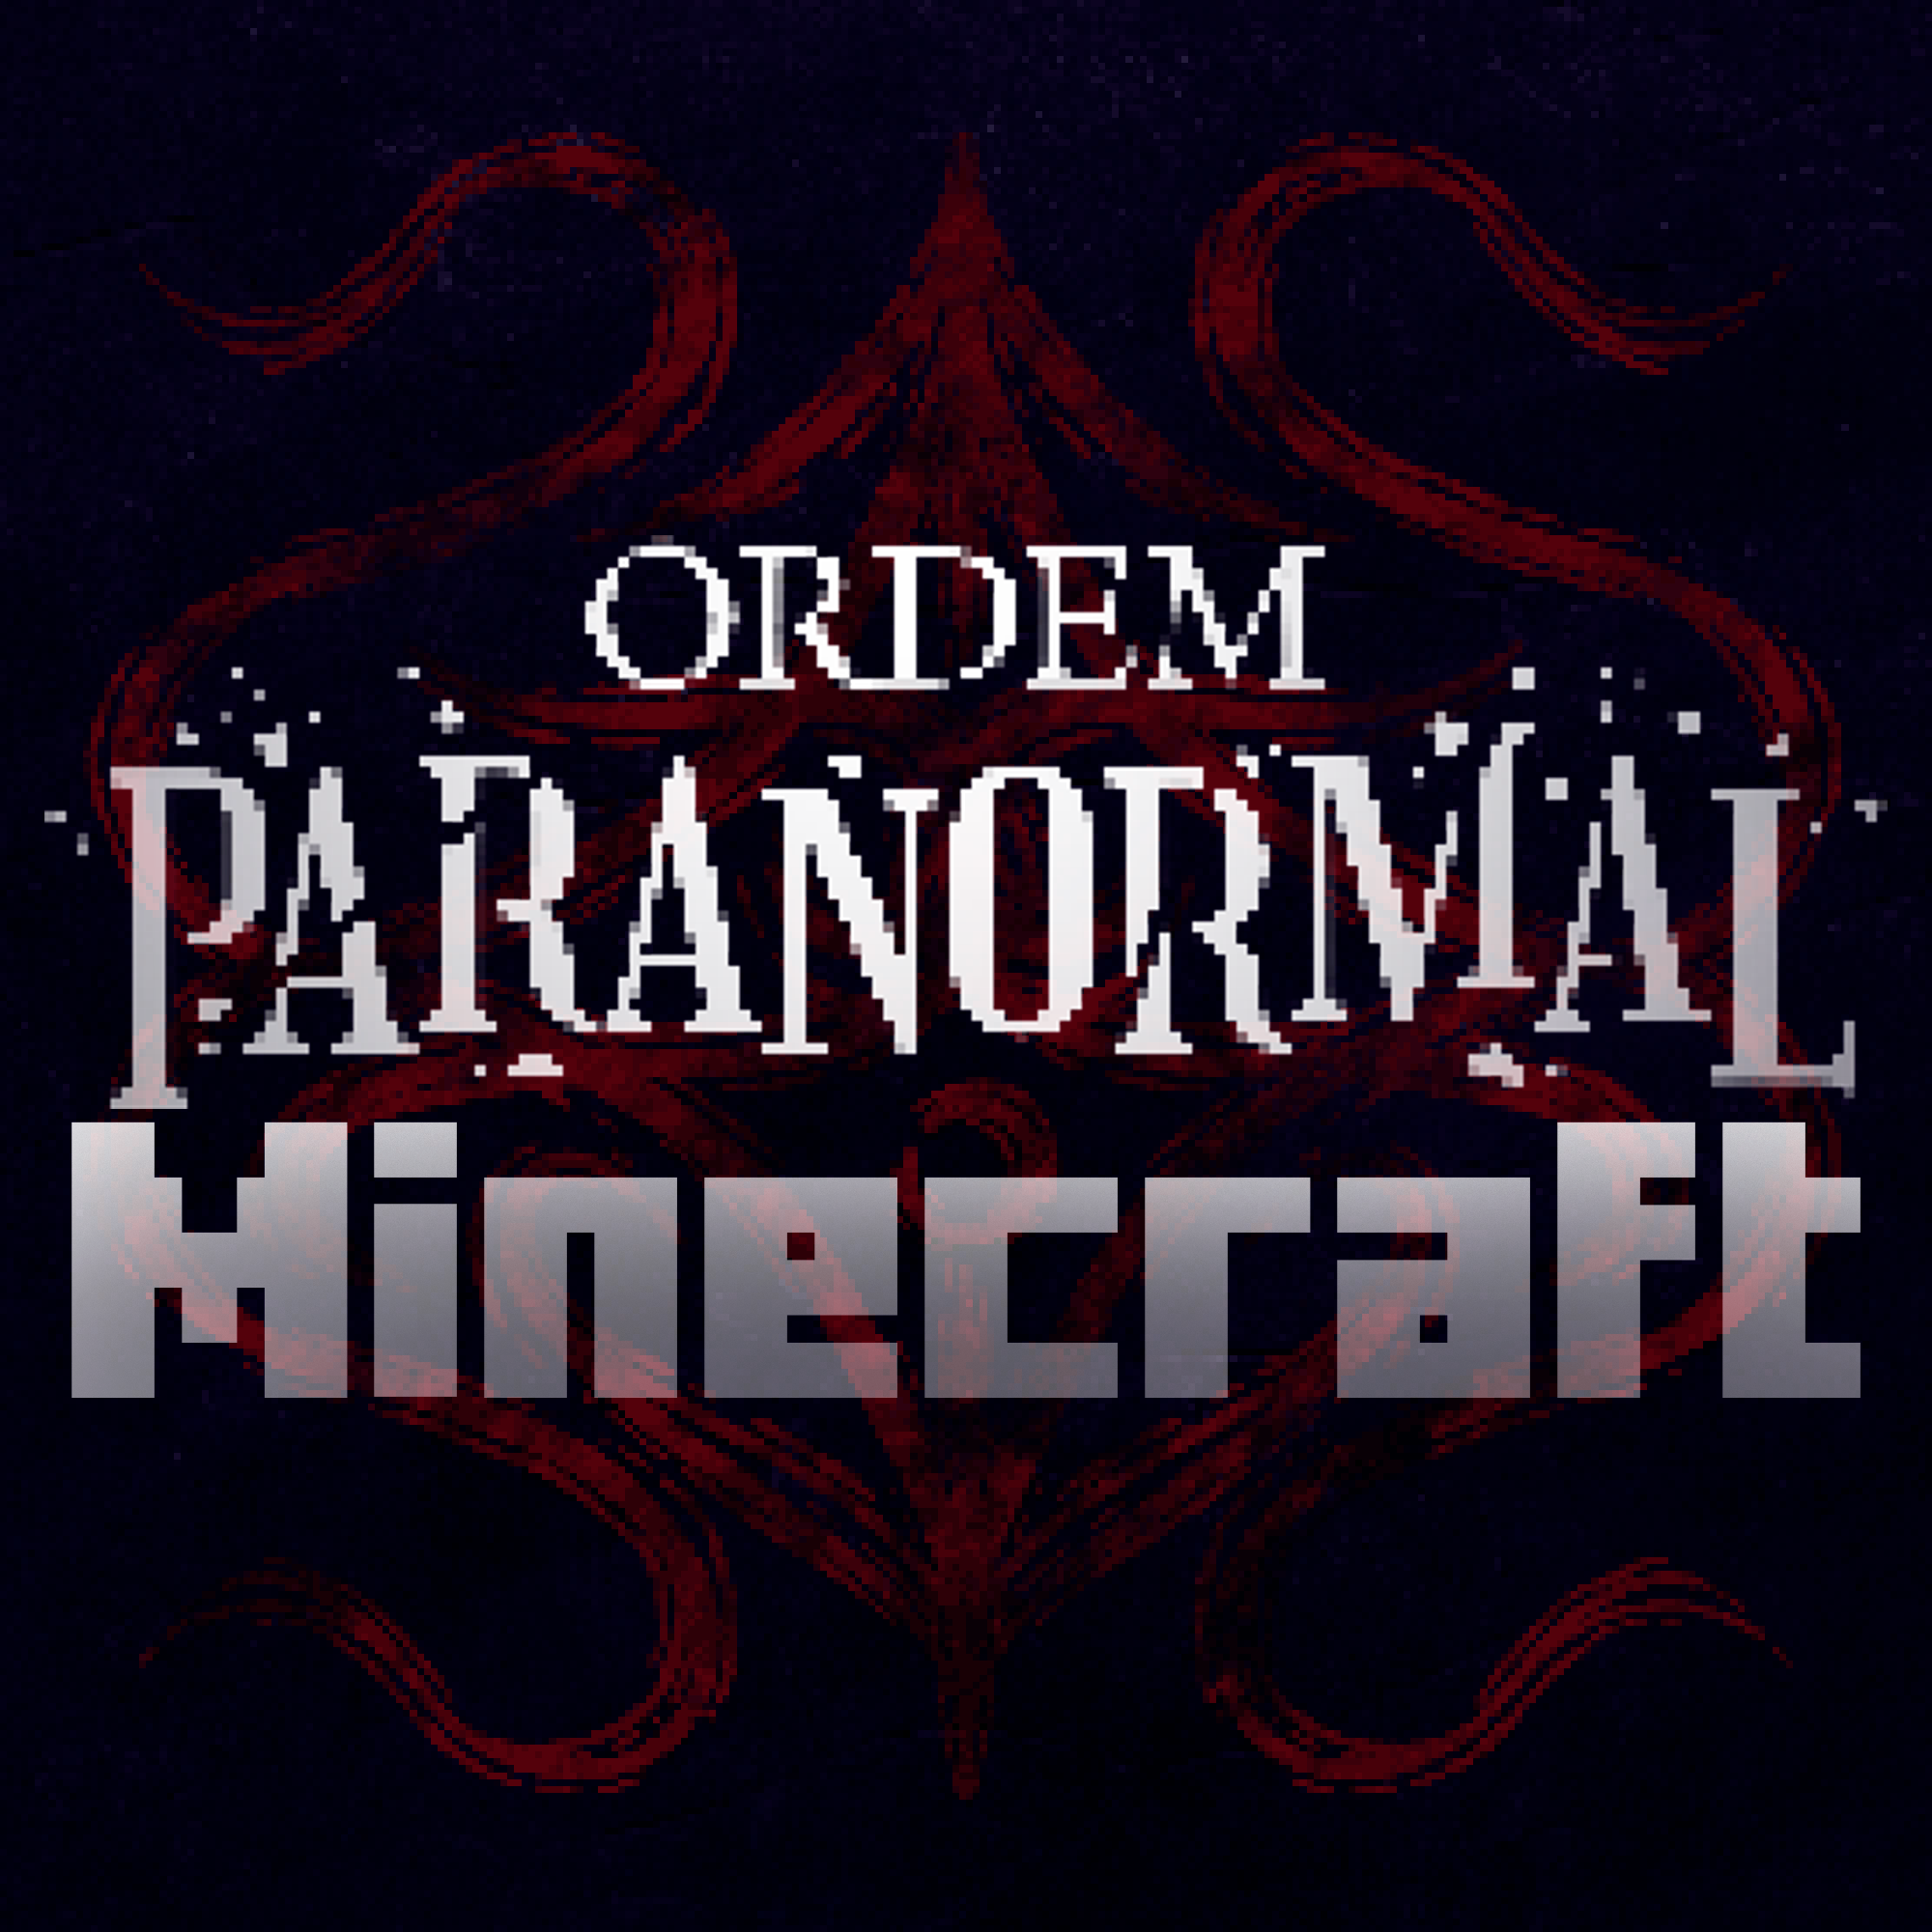 Ordo Realitas - Minecraft Modpacks - CurseForge